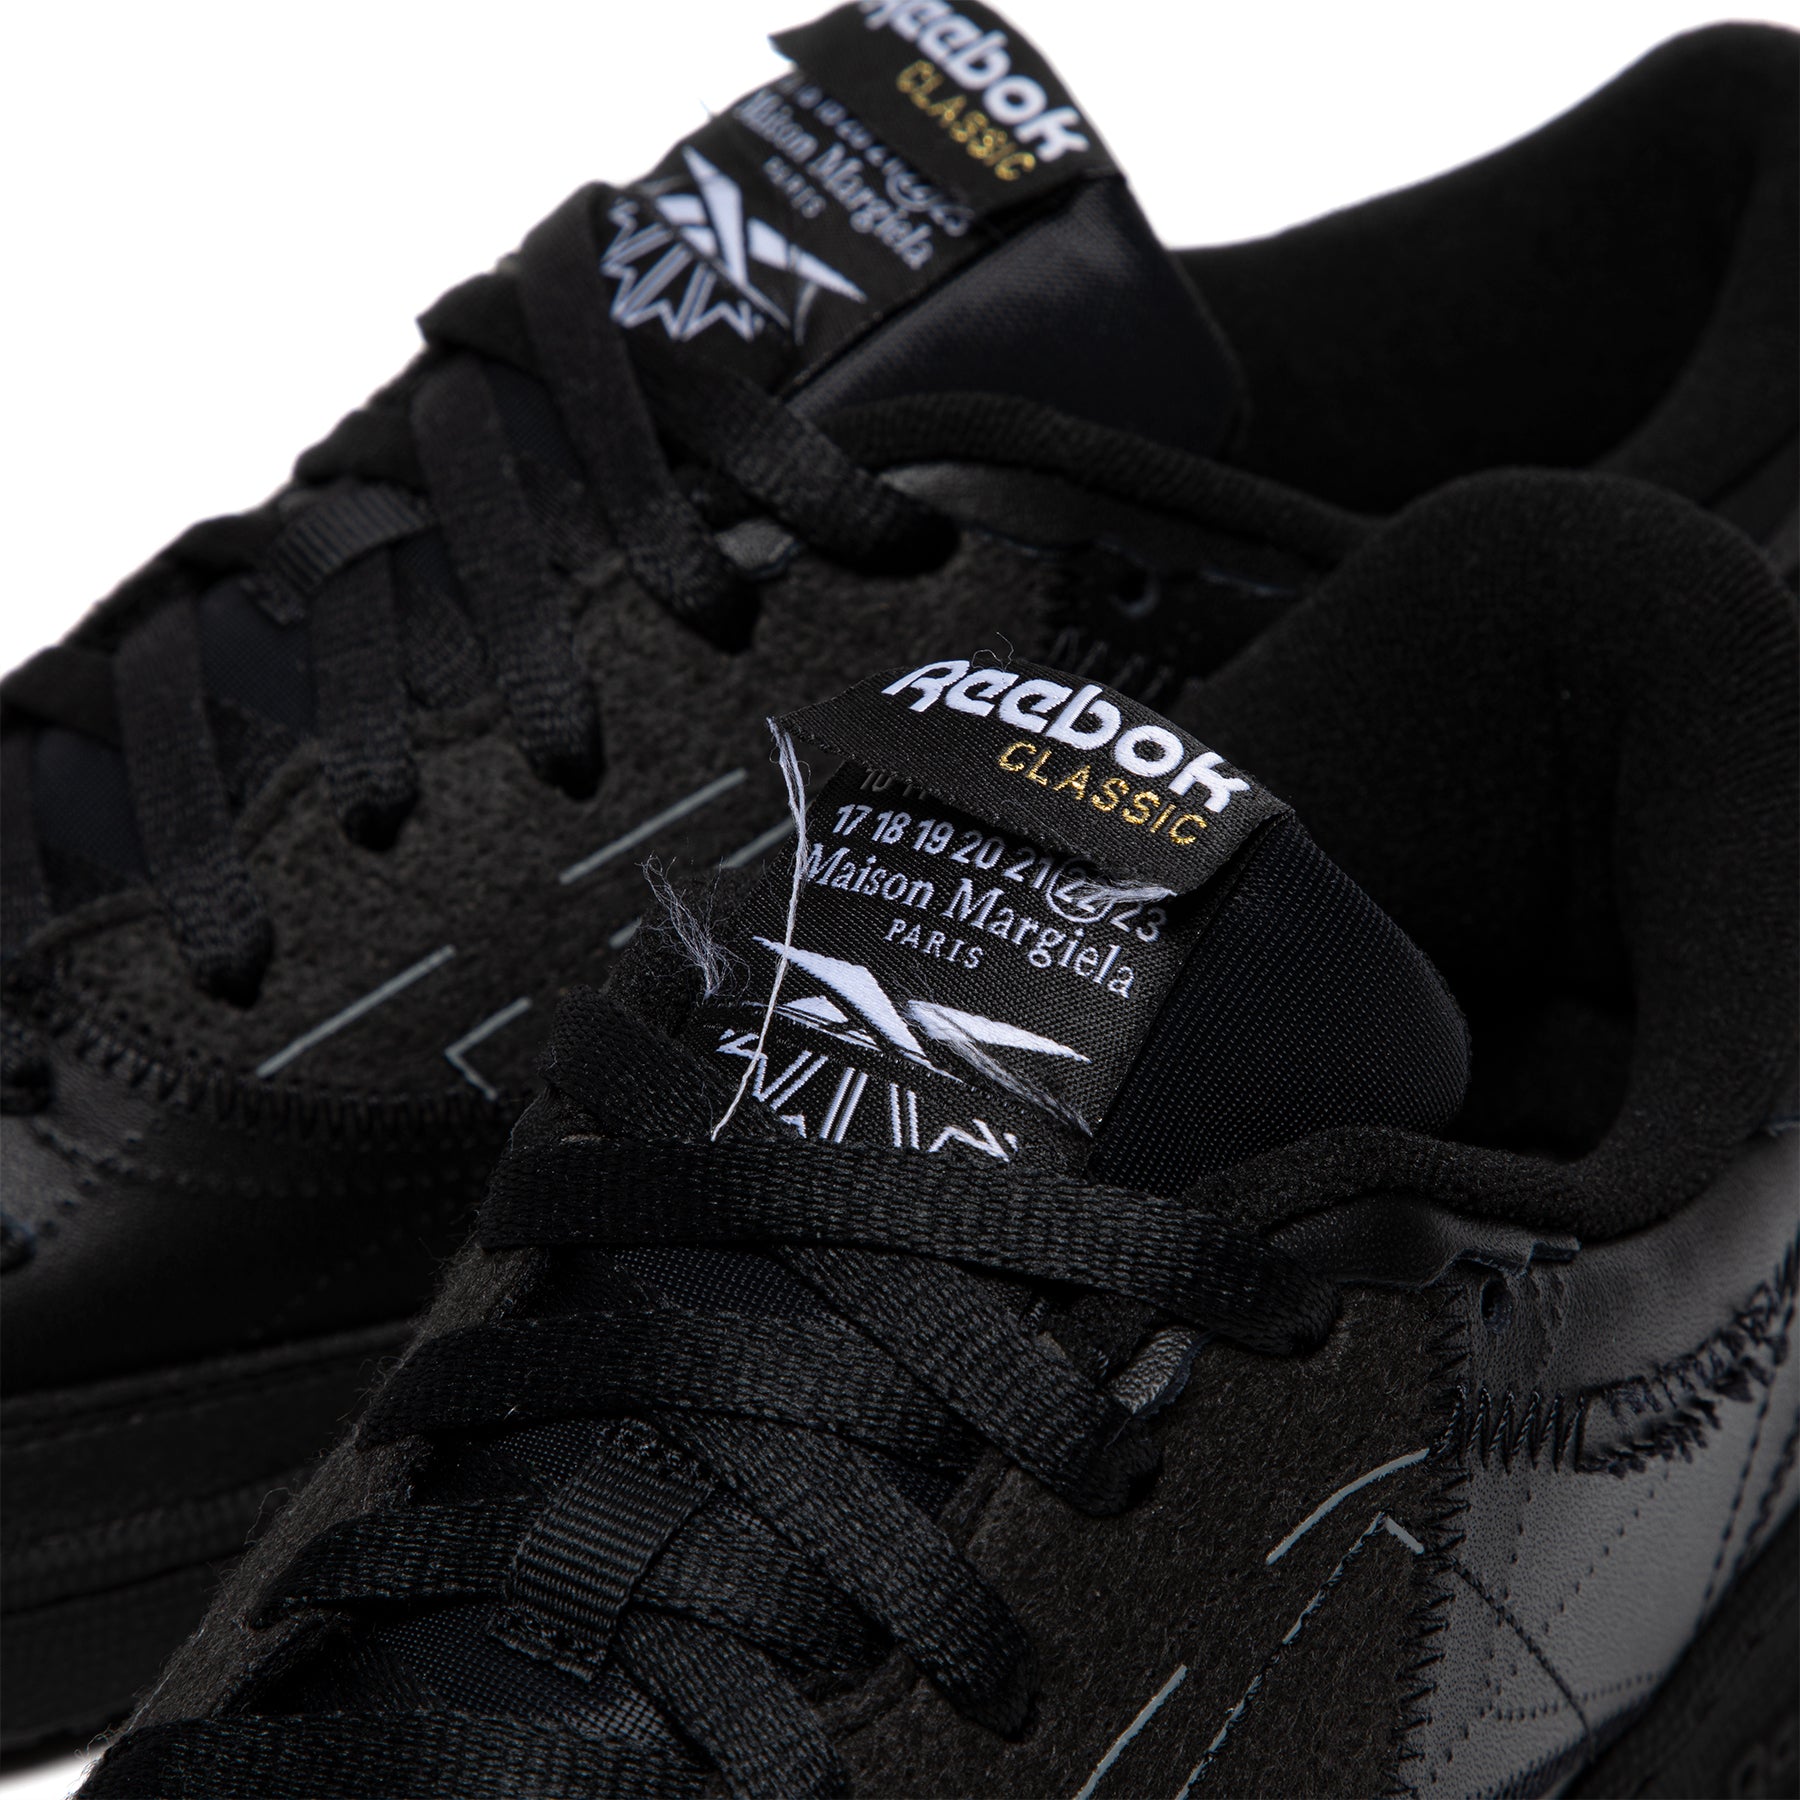 Reebok Maison Margiela Club C Memory Of Shoes Black/Footwear